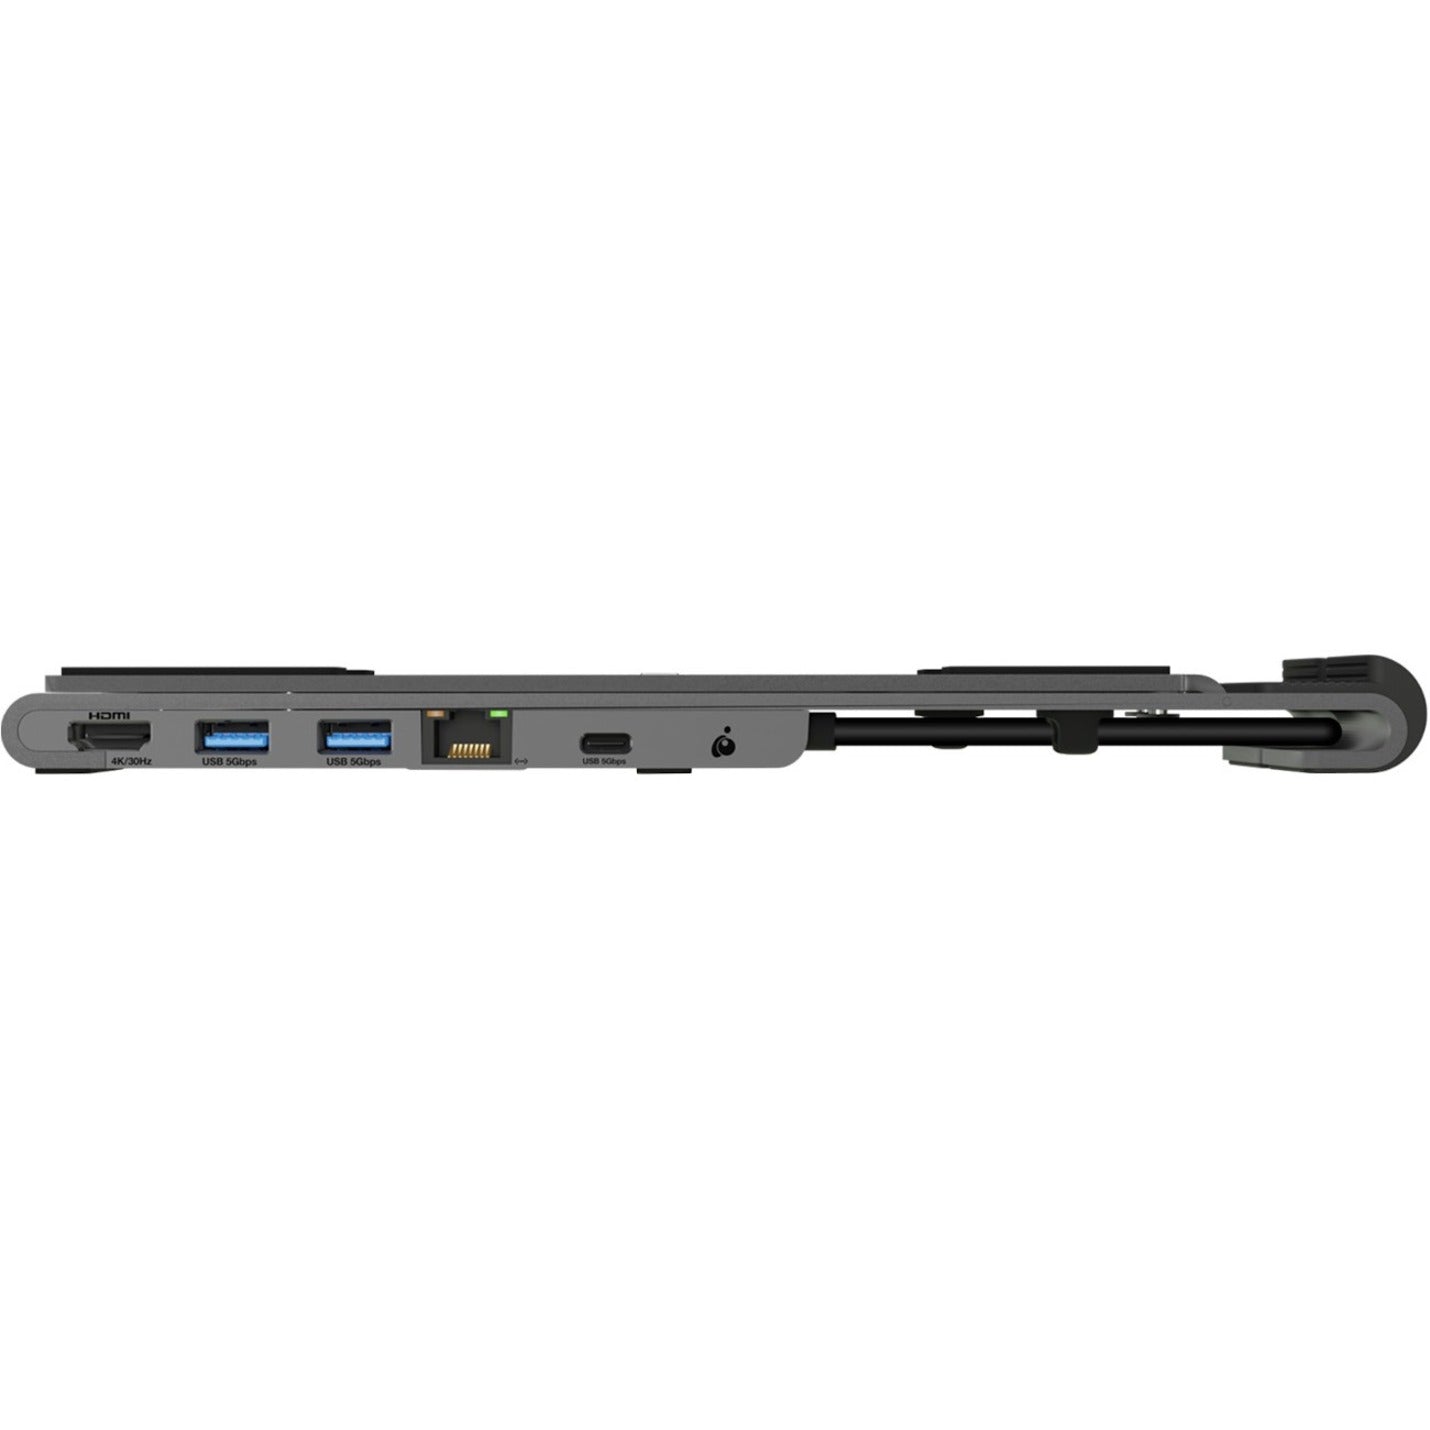 IOGEAR GUD3C4K1LS Dock Pro 6-in-1 4K Dock Stand, Adjustable Angle, Lightweight, Portable, USB Charging Port, HDMI Port